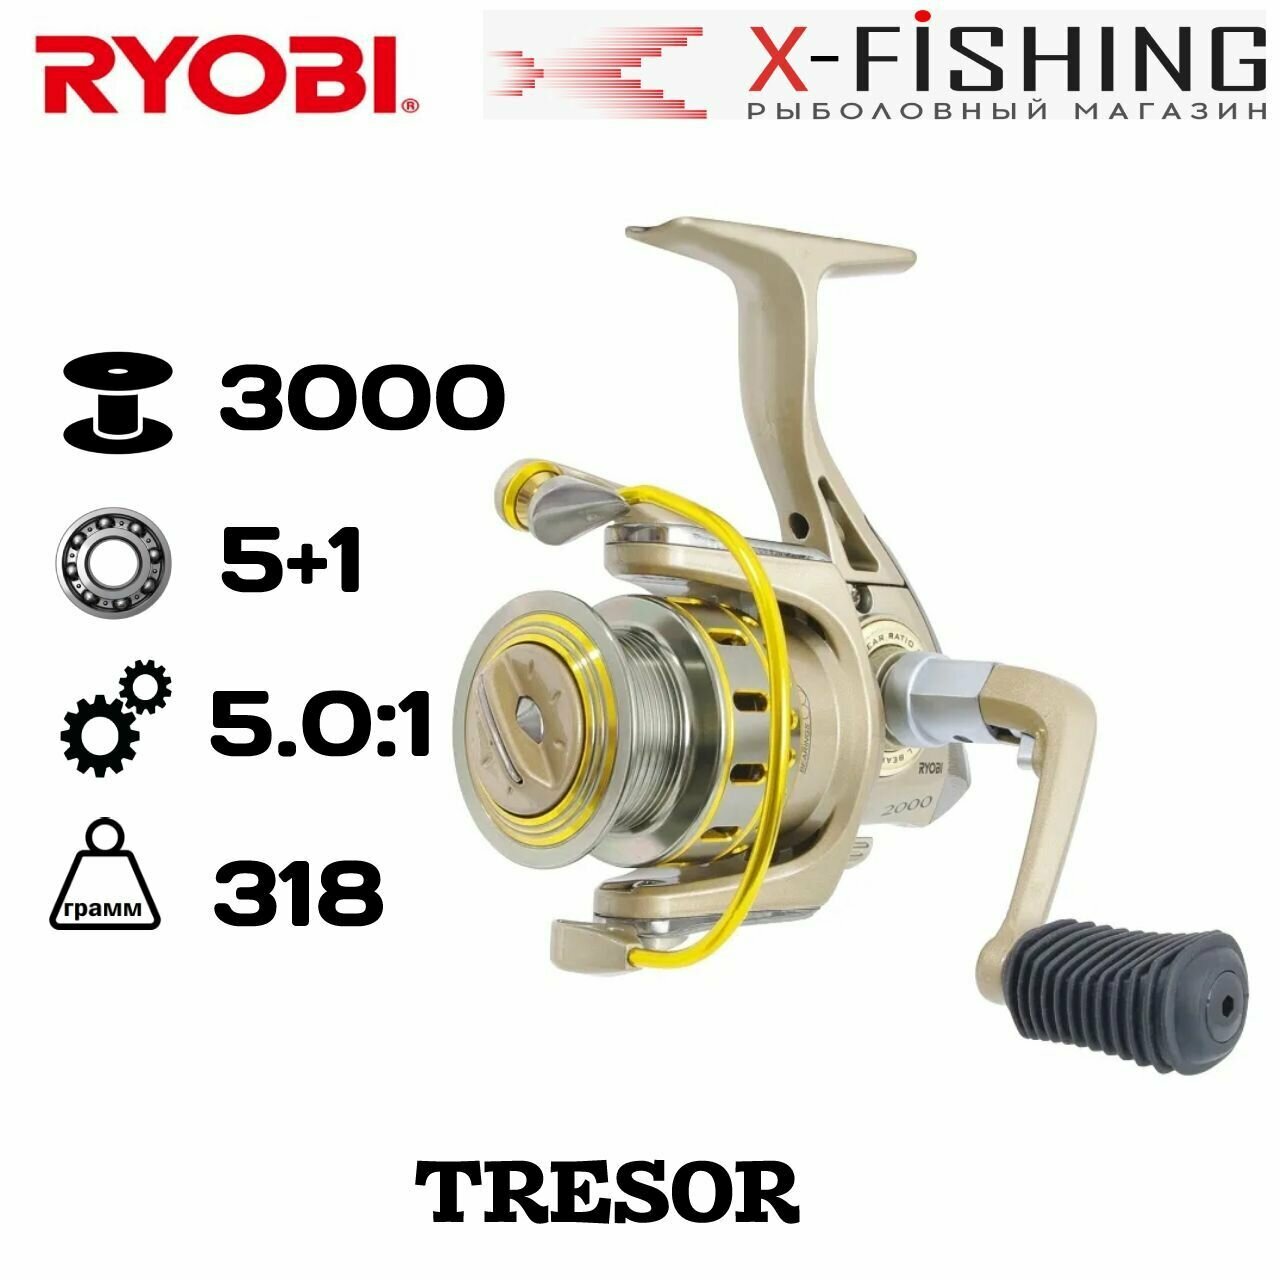 Катушка для рыбалки Ryobi Tresor 3000